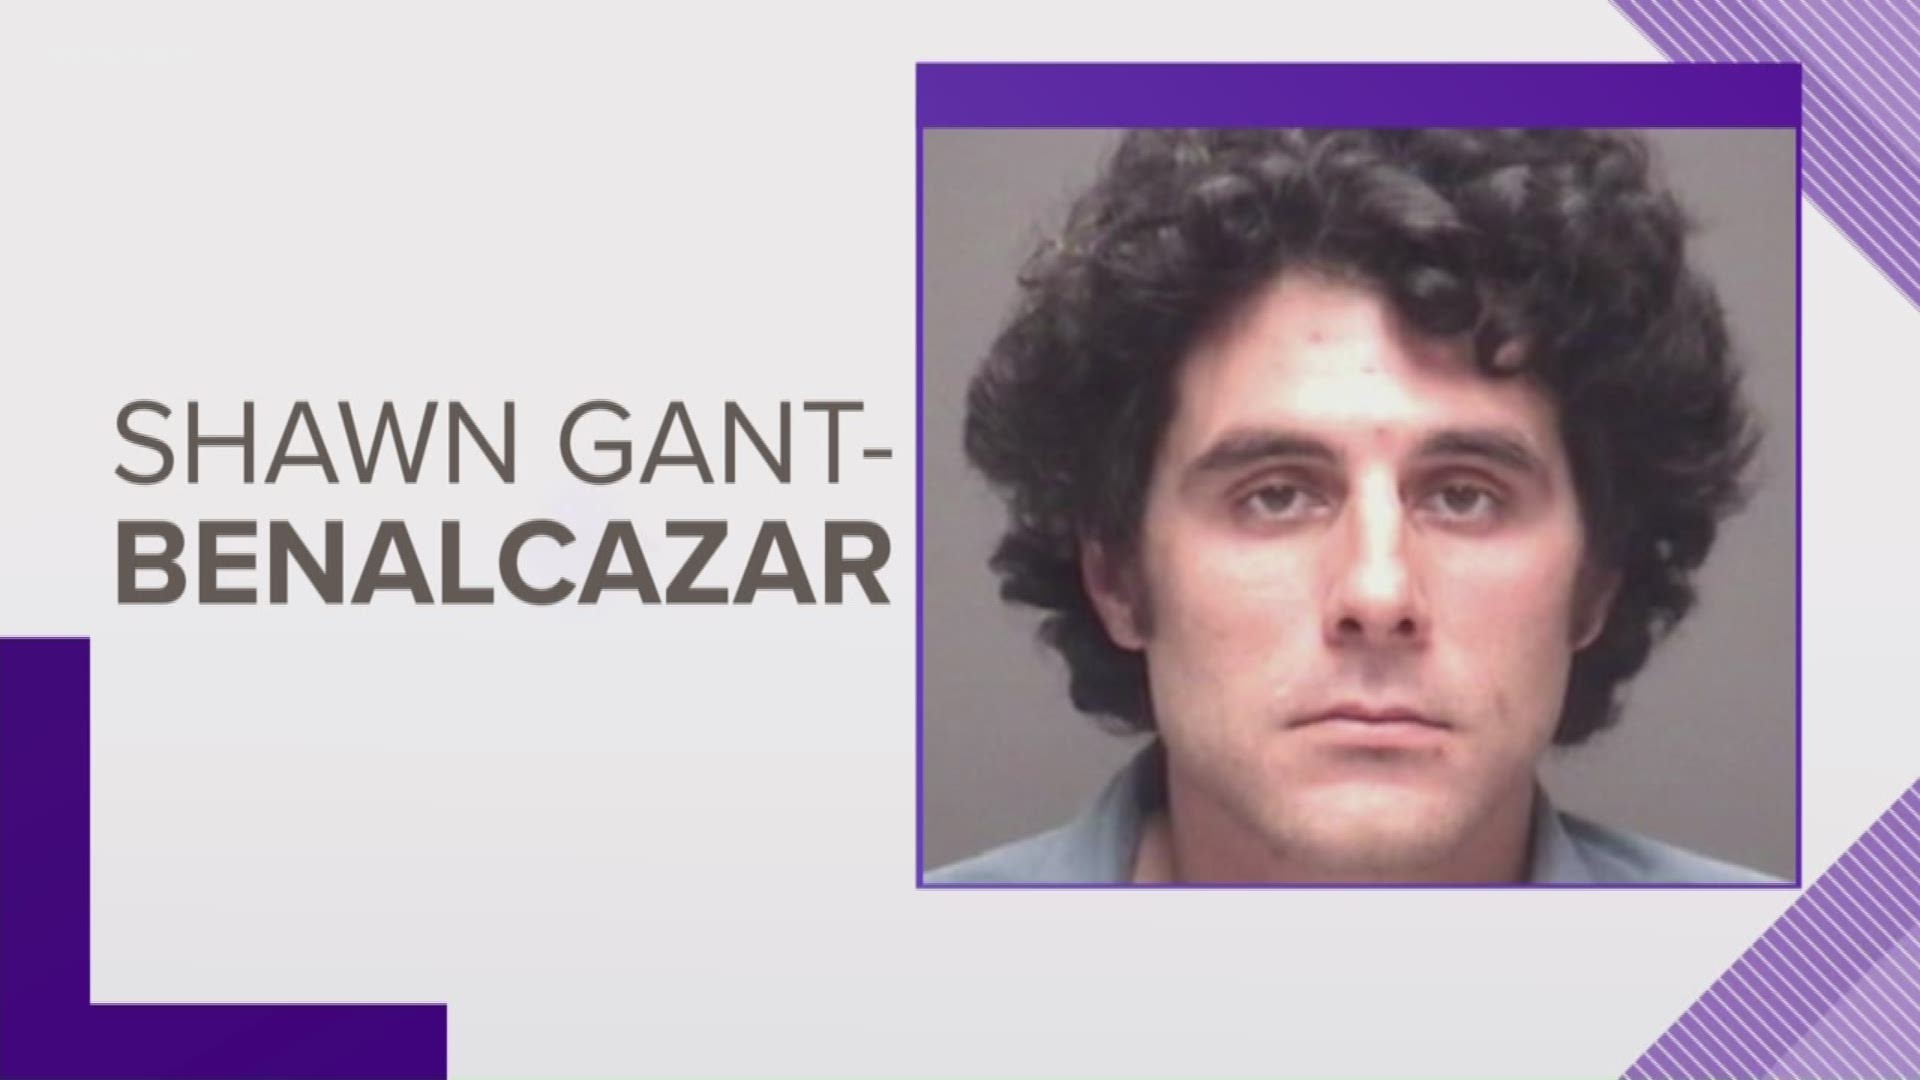 Shawn Gant-Benalcazar, a man who was accused of fatally stabbing an Austin choir teacher in 2014, has been found guilty of capital murder.